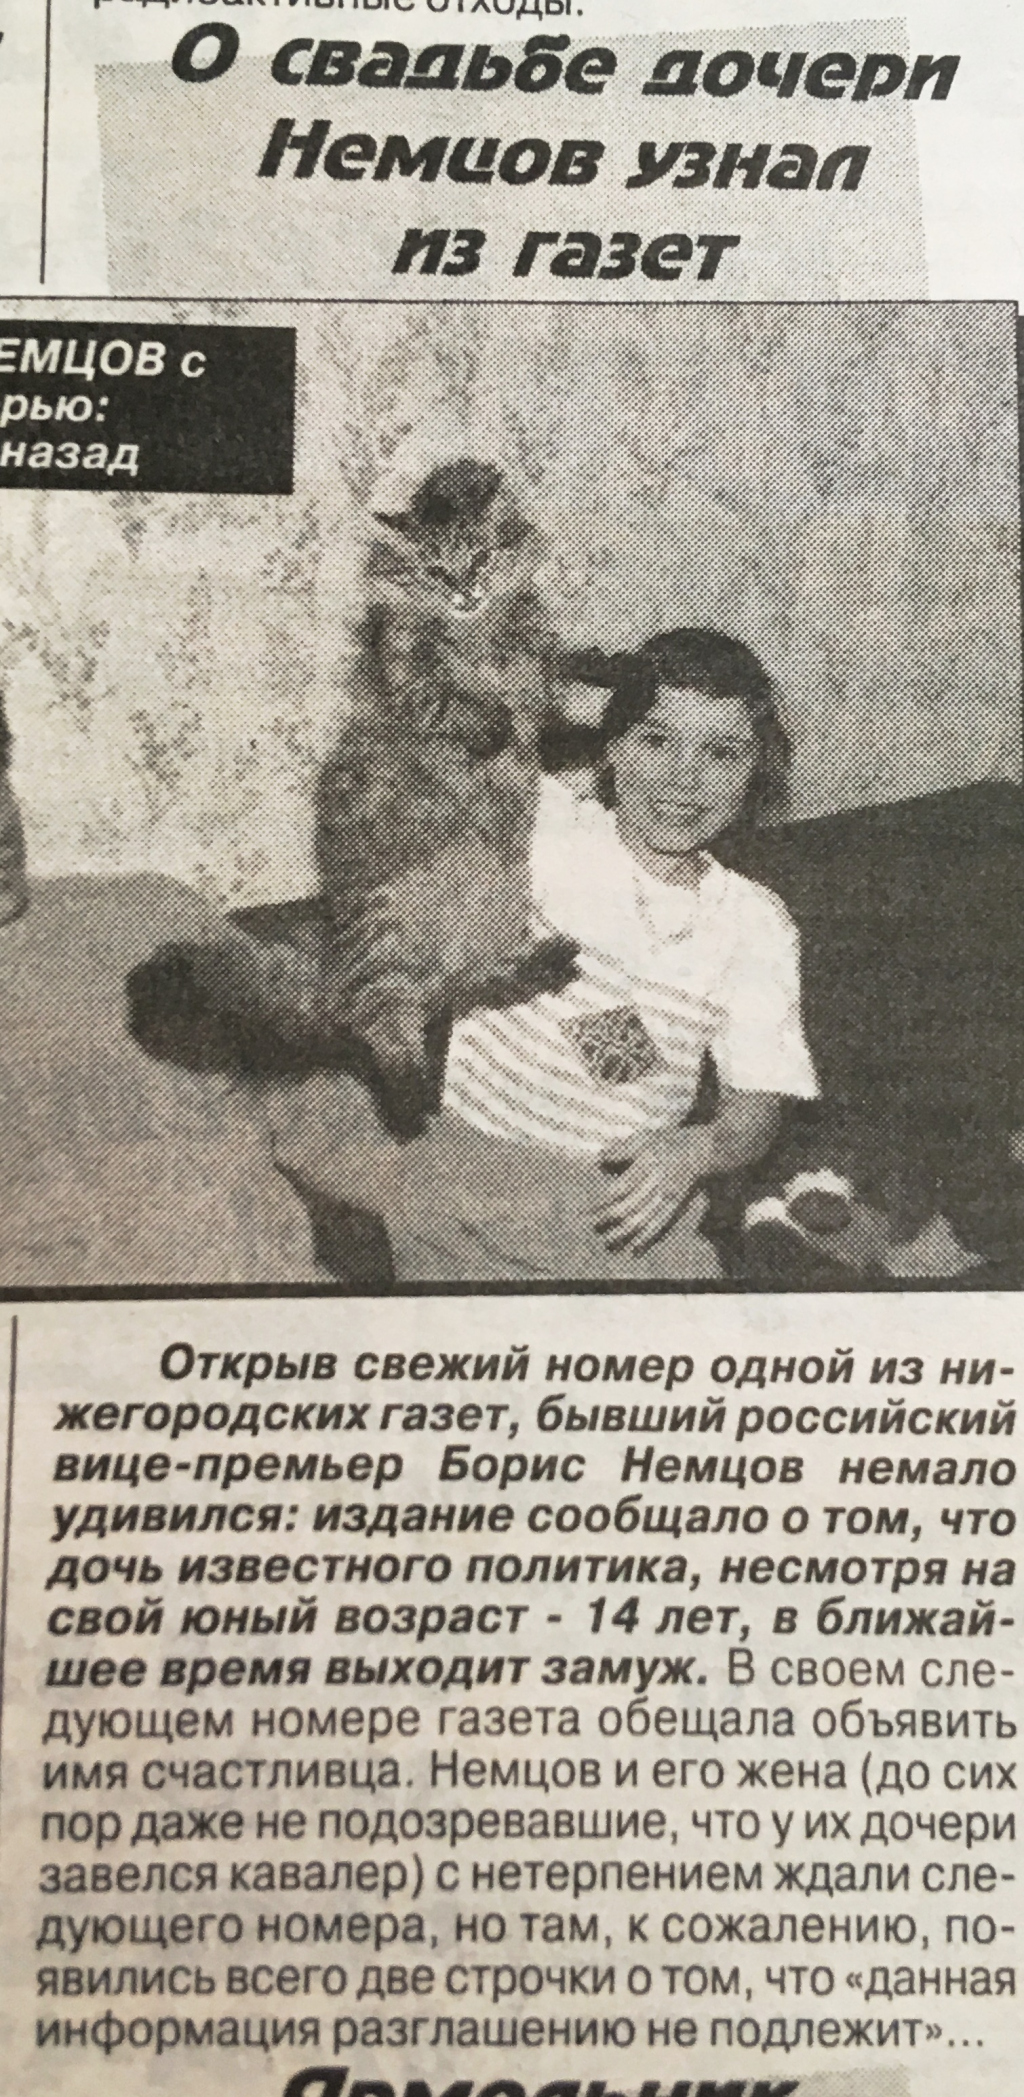 Борис Немцов 1999 год, свадьба дочери Немцова